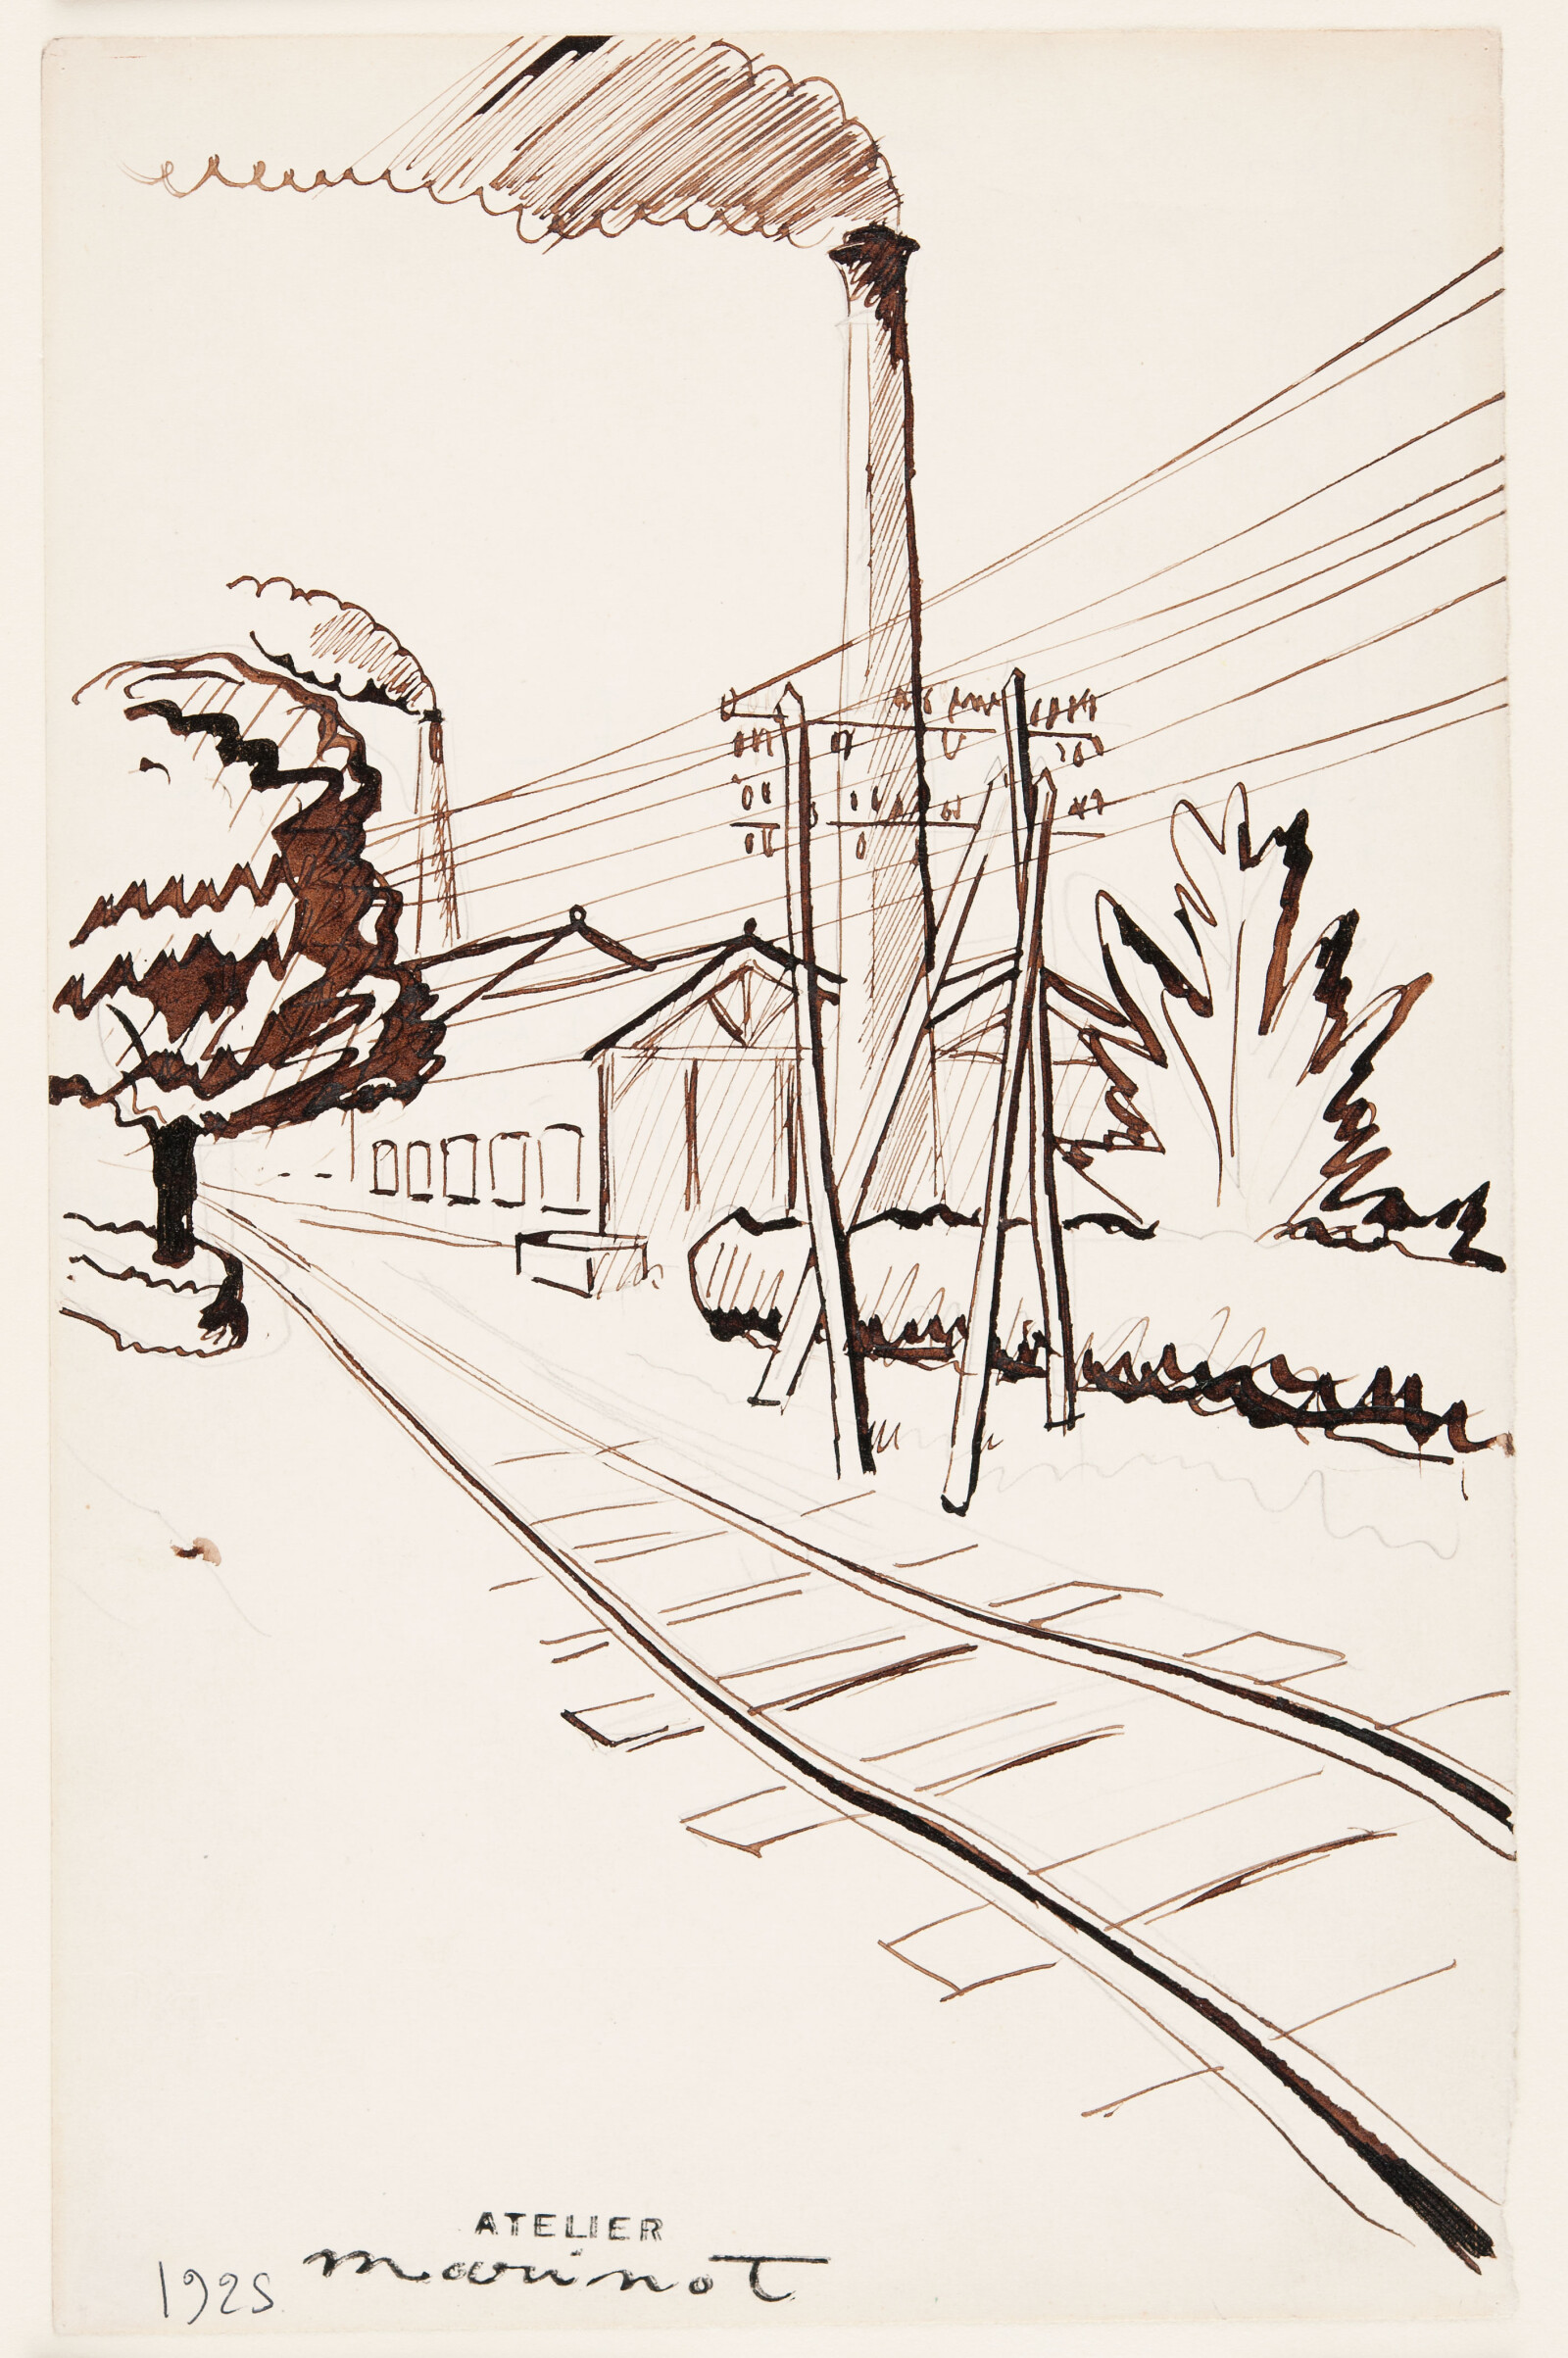 Near Bar-sur-Seine, 1925, pen ink and pencil on paper. (DA006752)